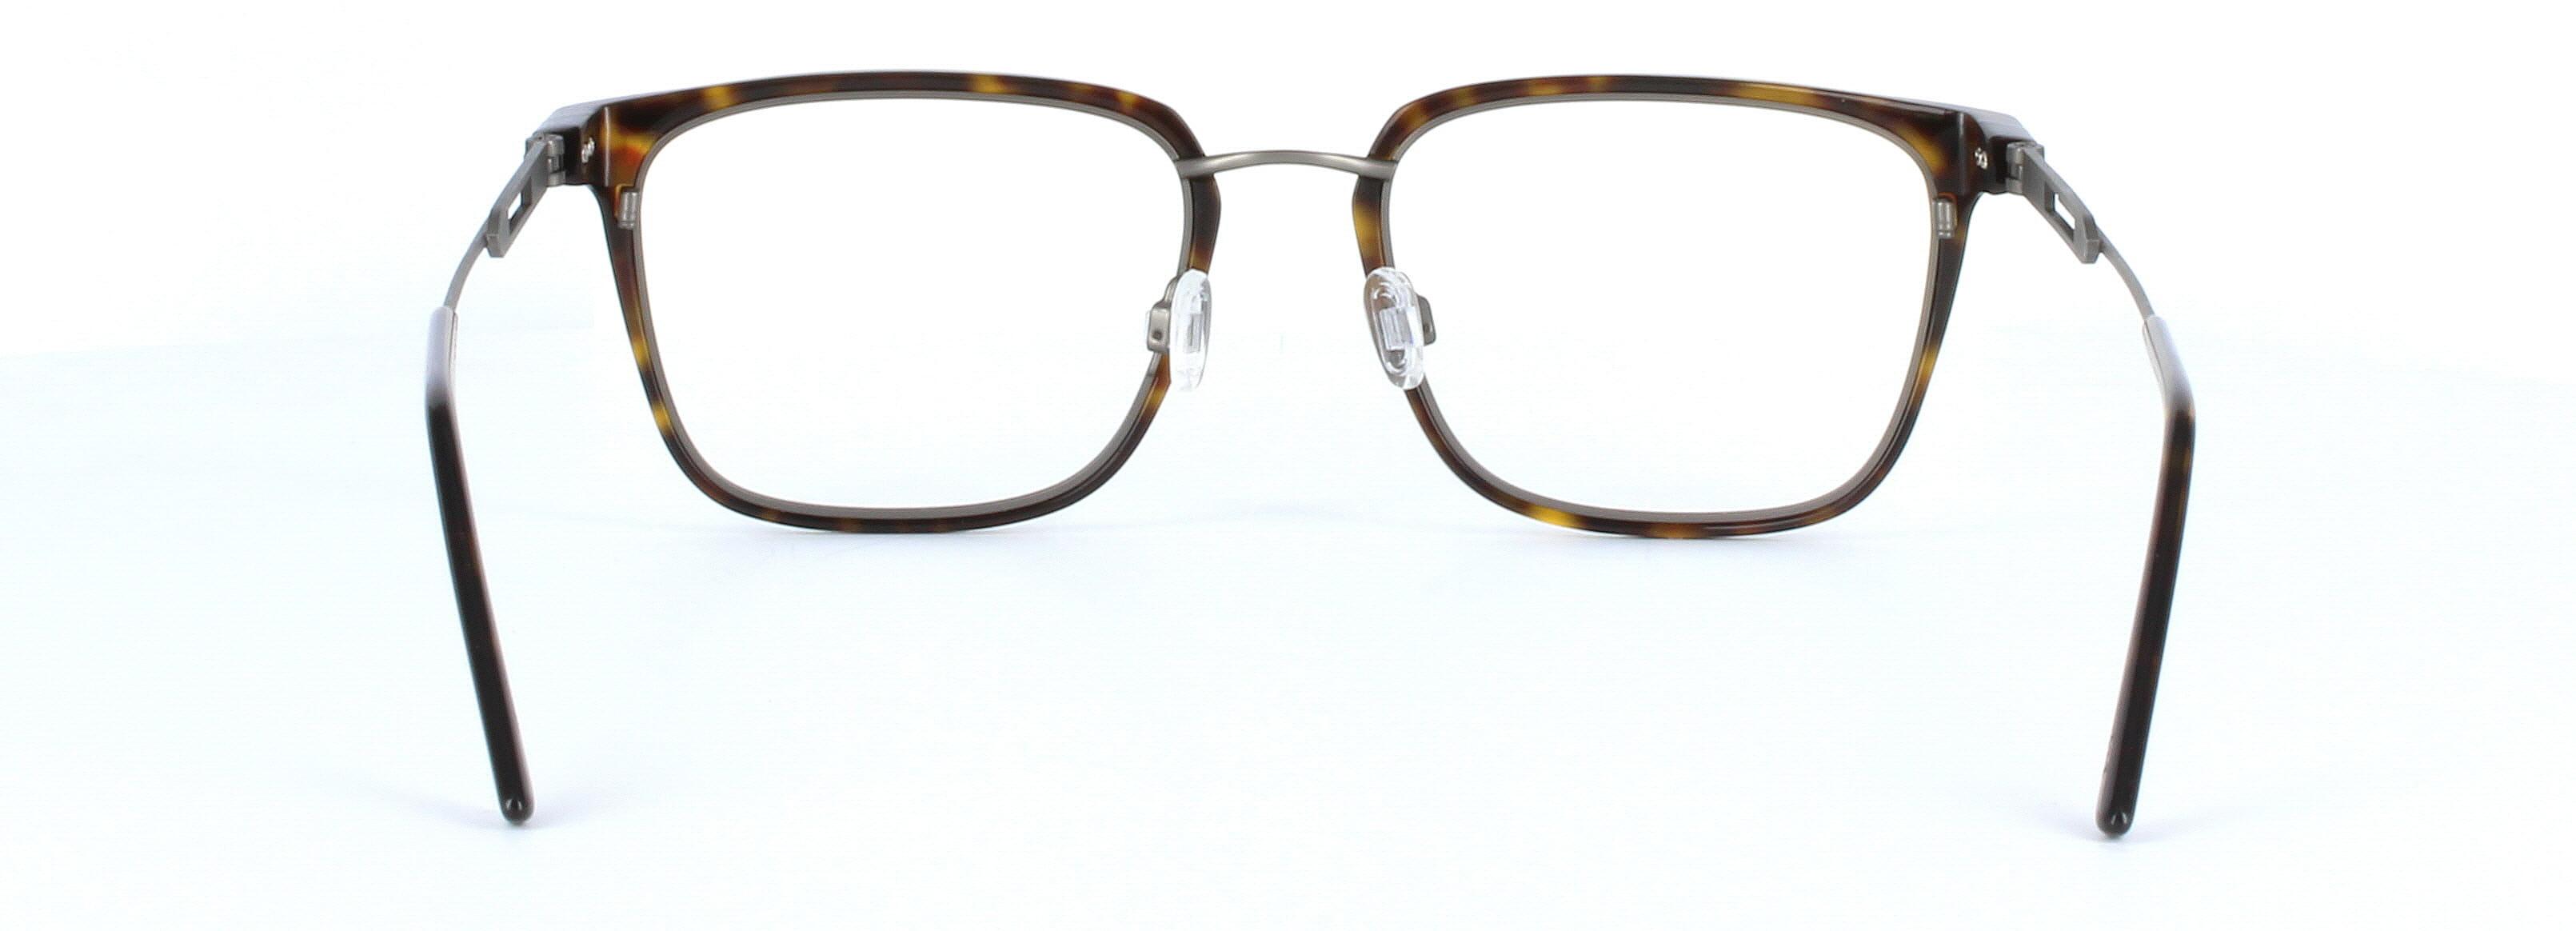 Calvin Klein 19718-235 Tortoise/Gun | Glasses | Glasses2You